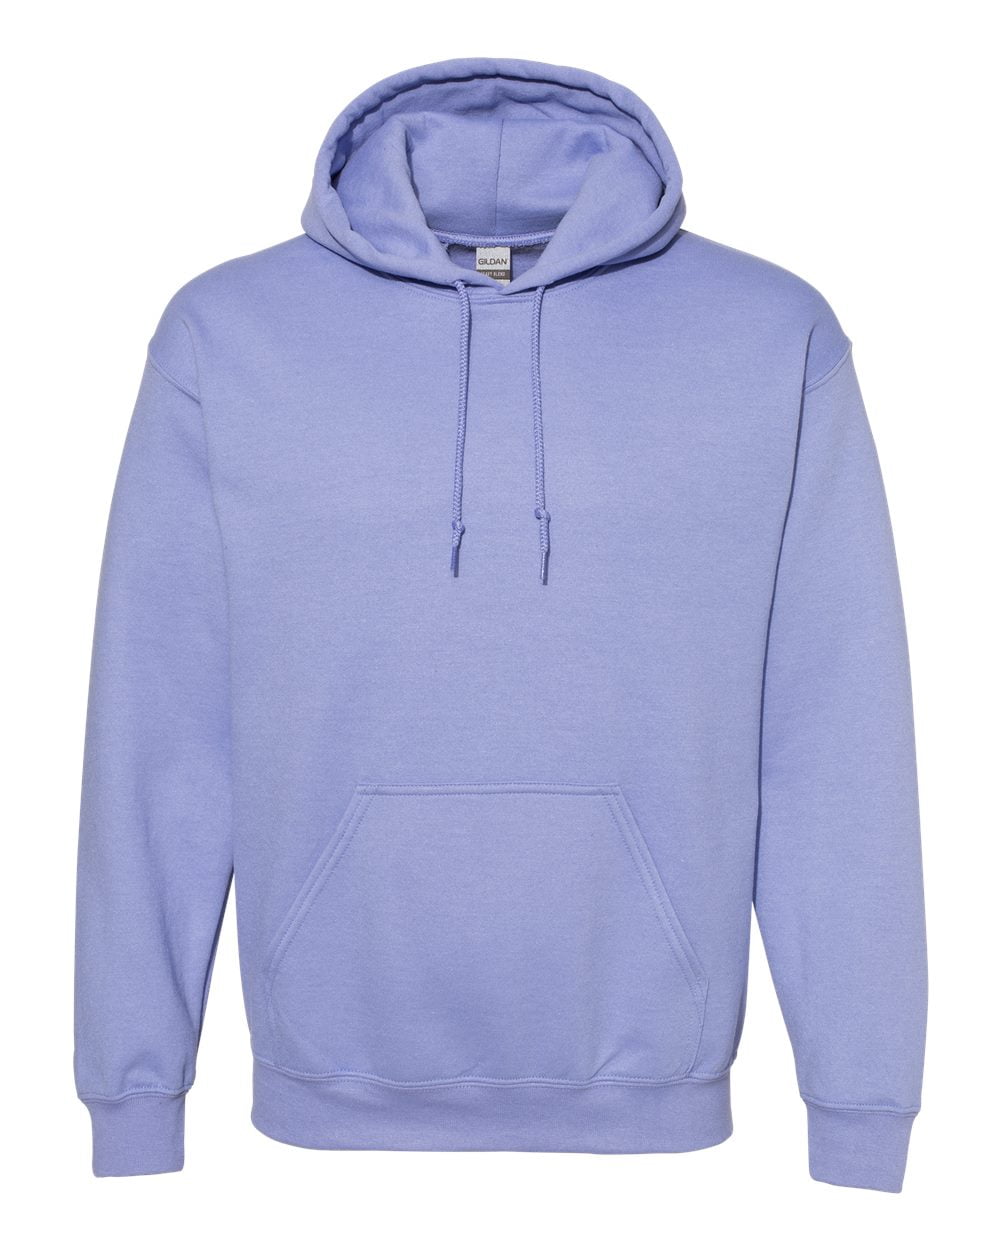 OXI - Men Multi Colors Hooded Sweatshirt Men Hoodies Color Violet Large ...